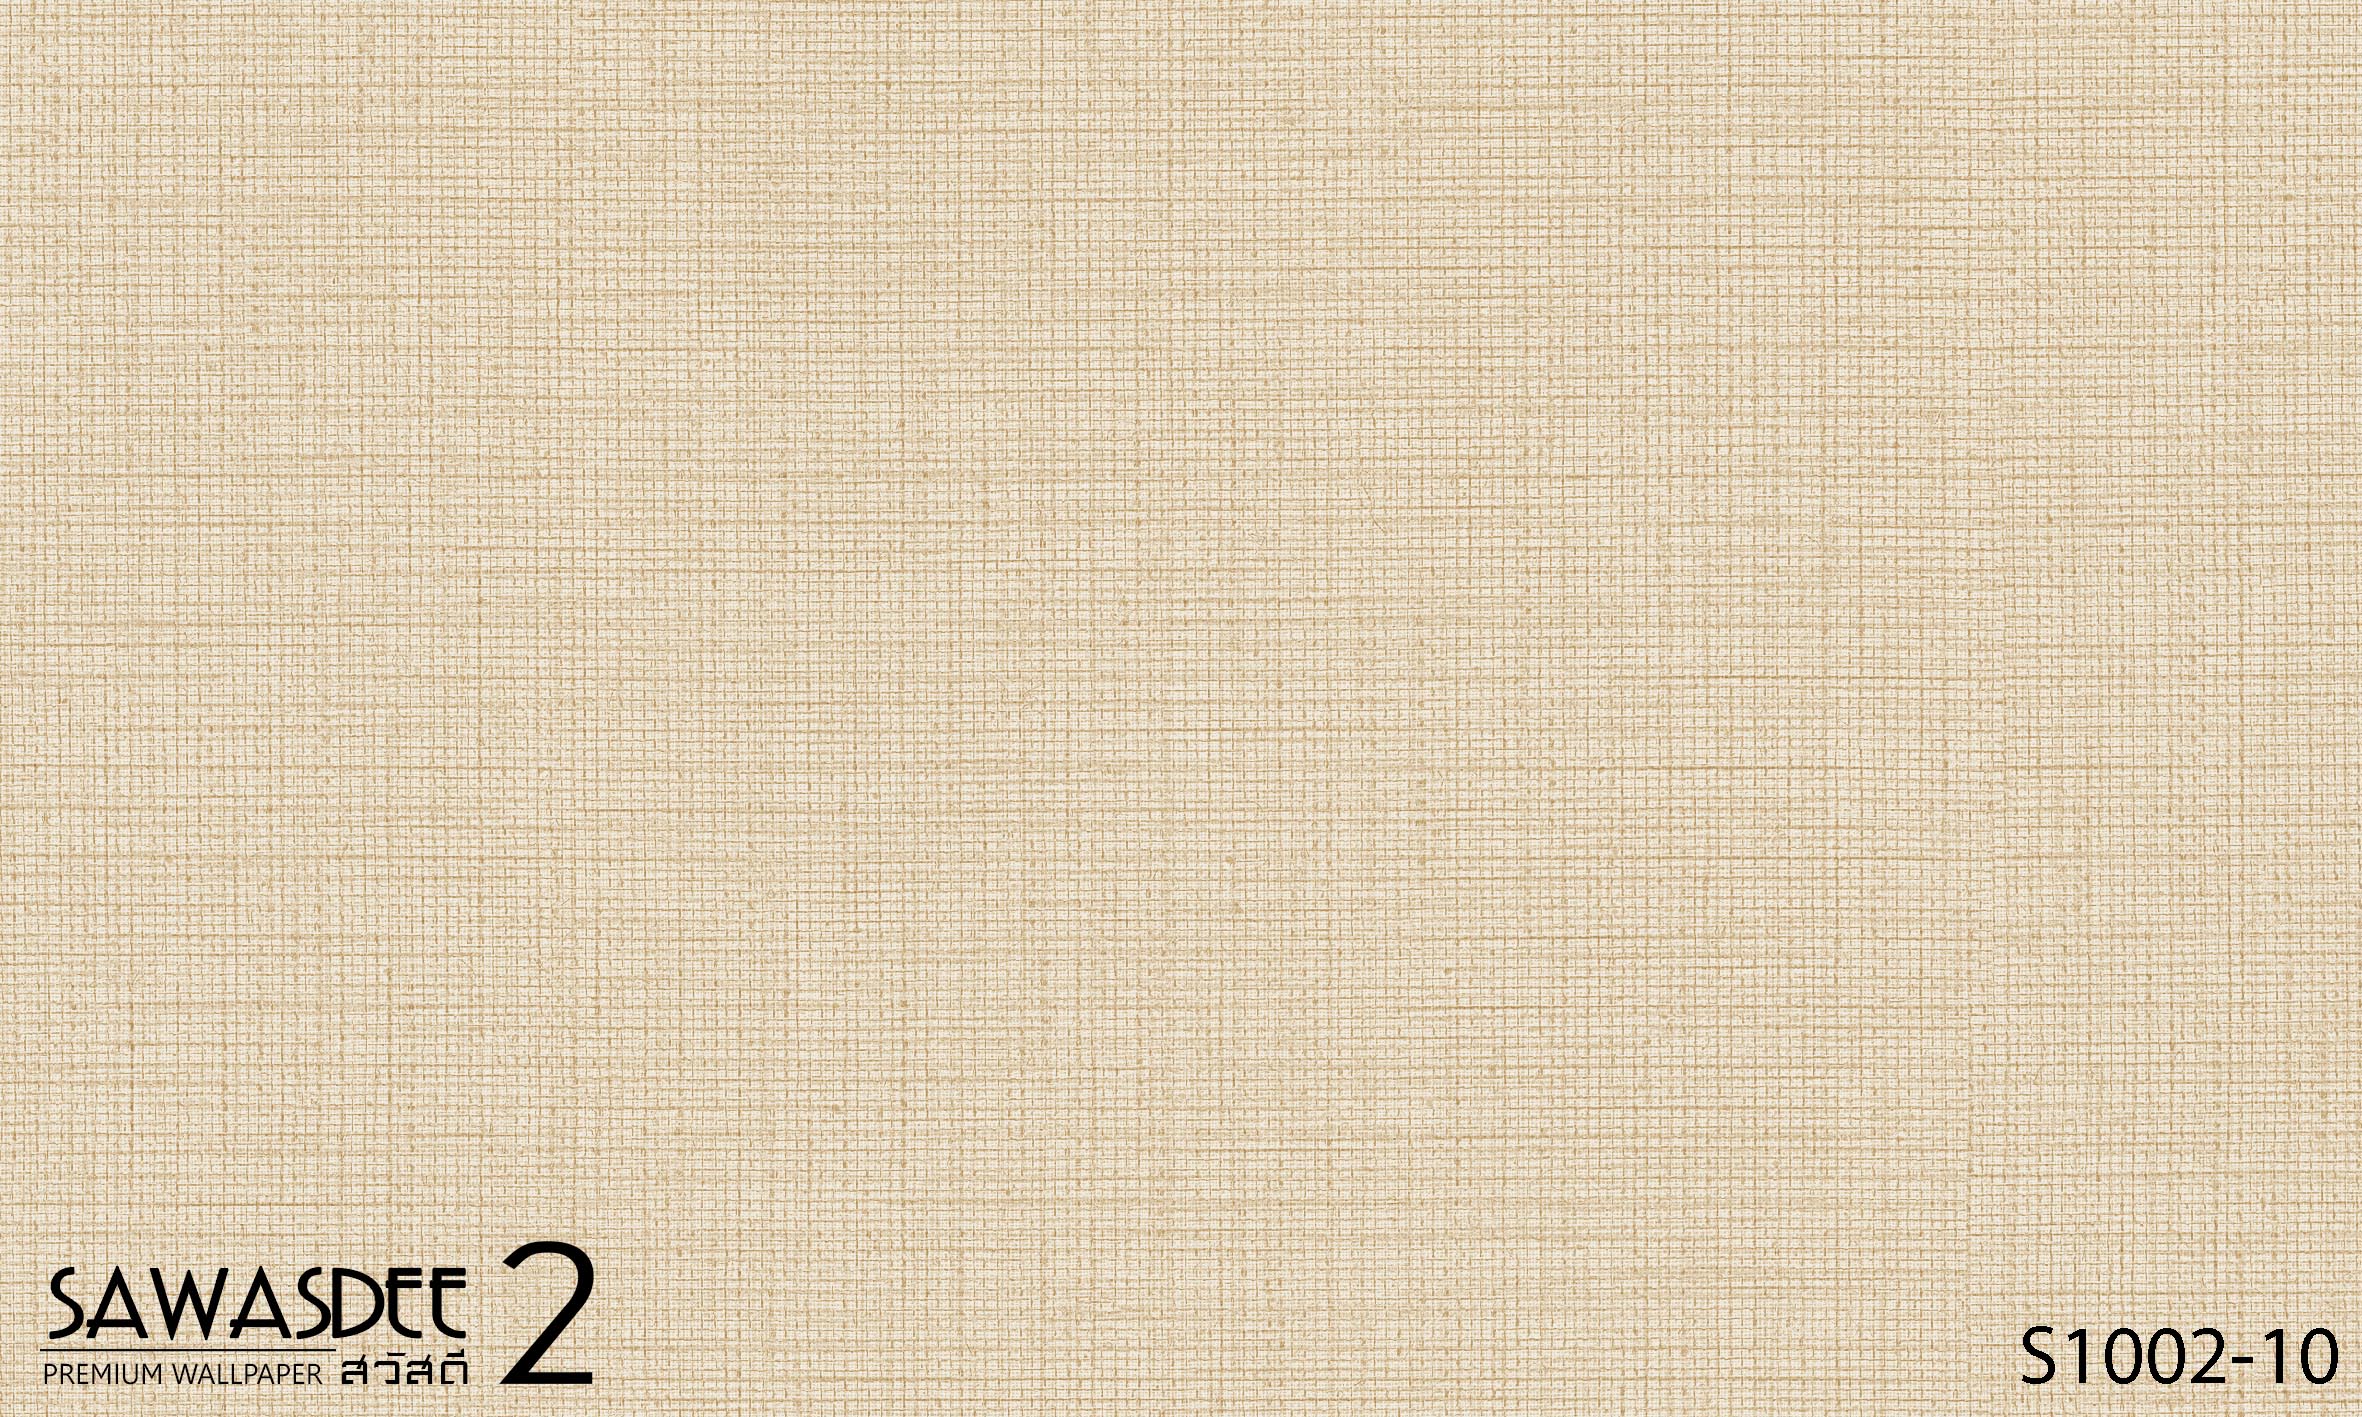 Wallpaper (SAWASDEE 2) S1002-10